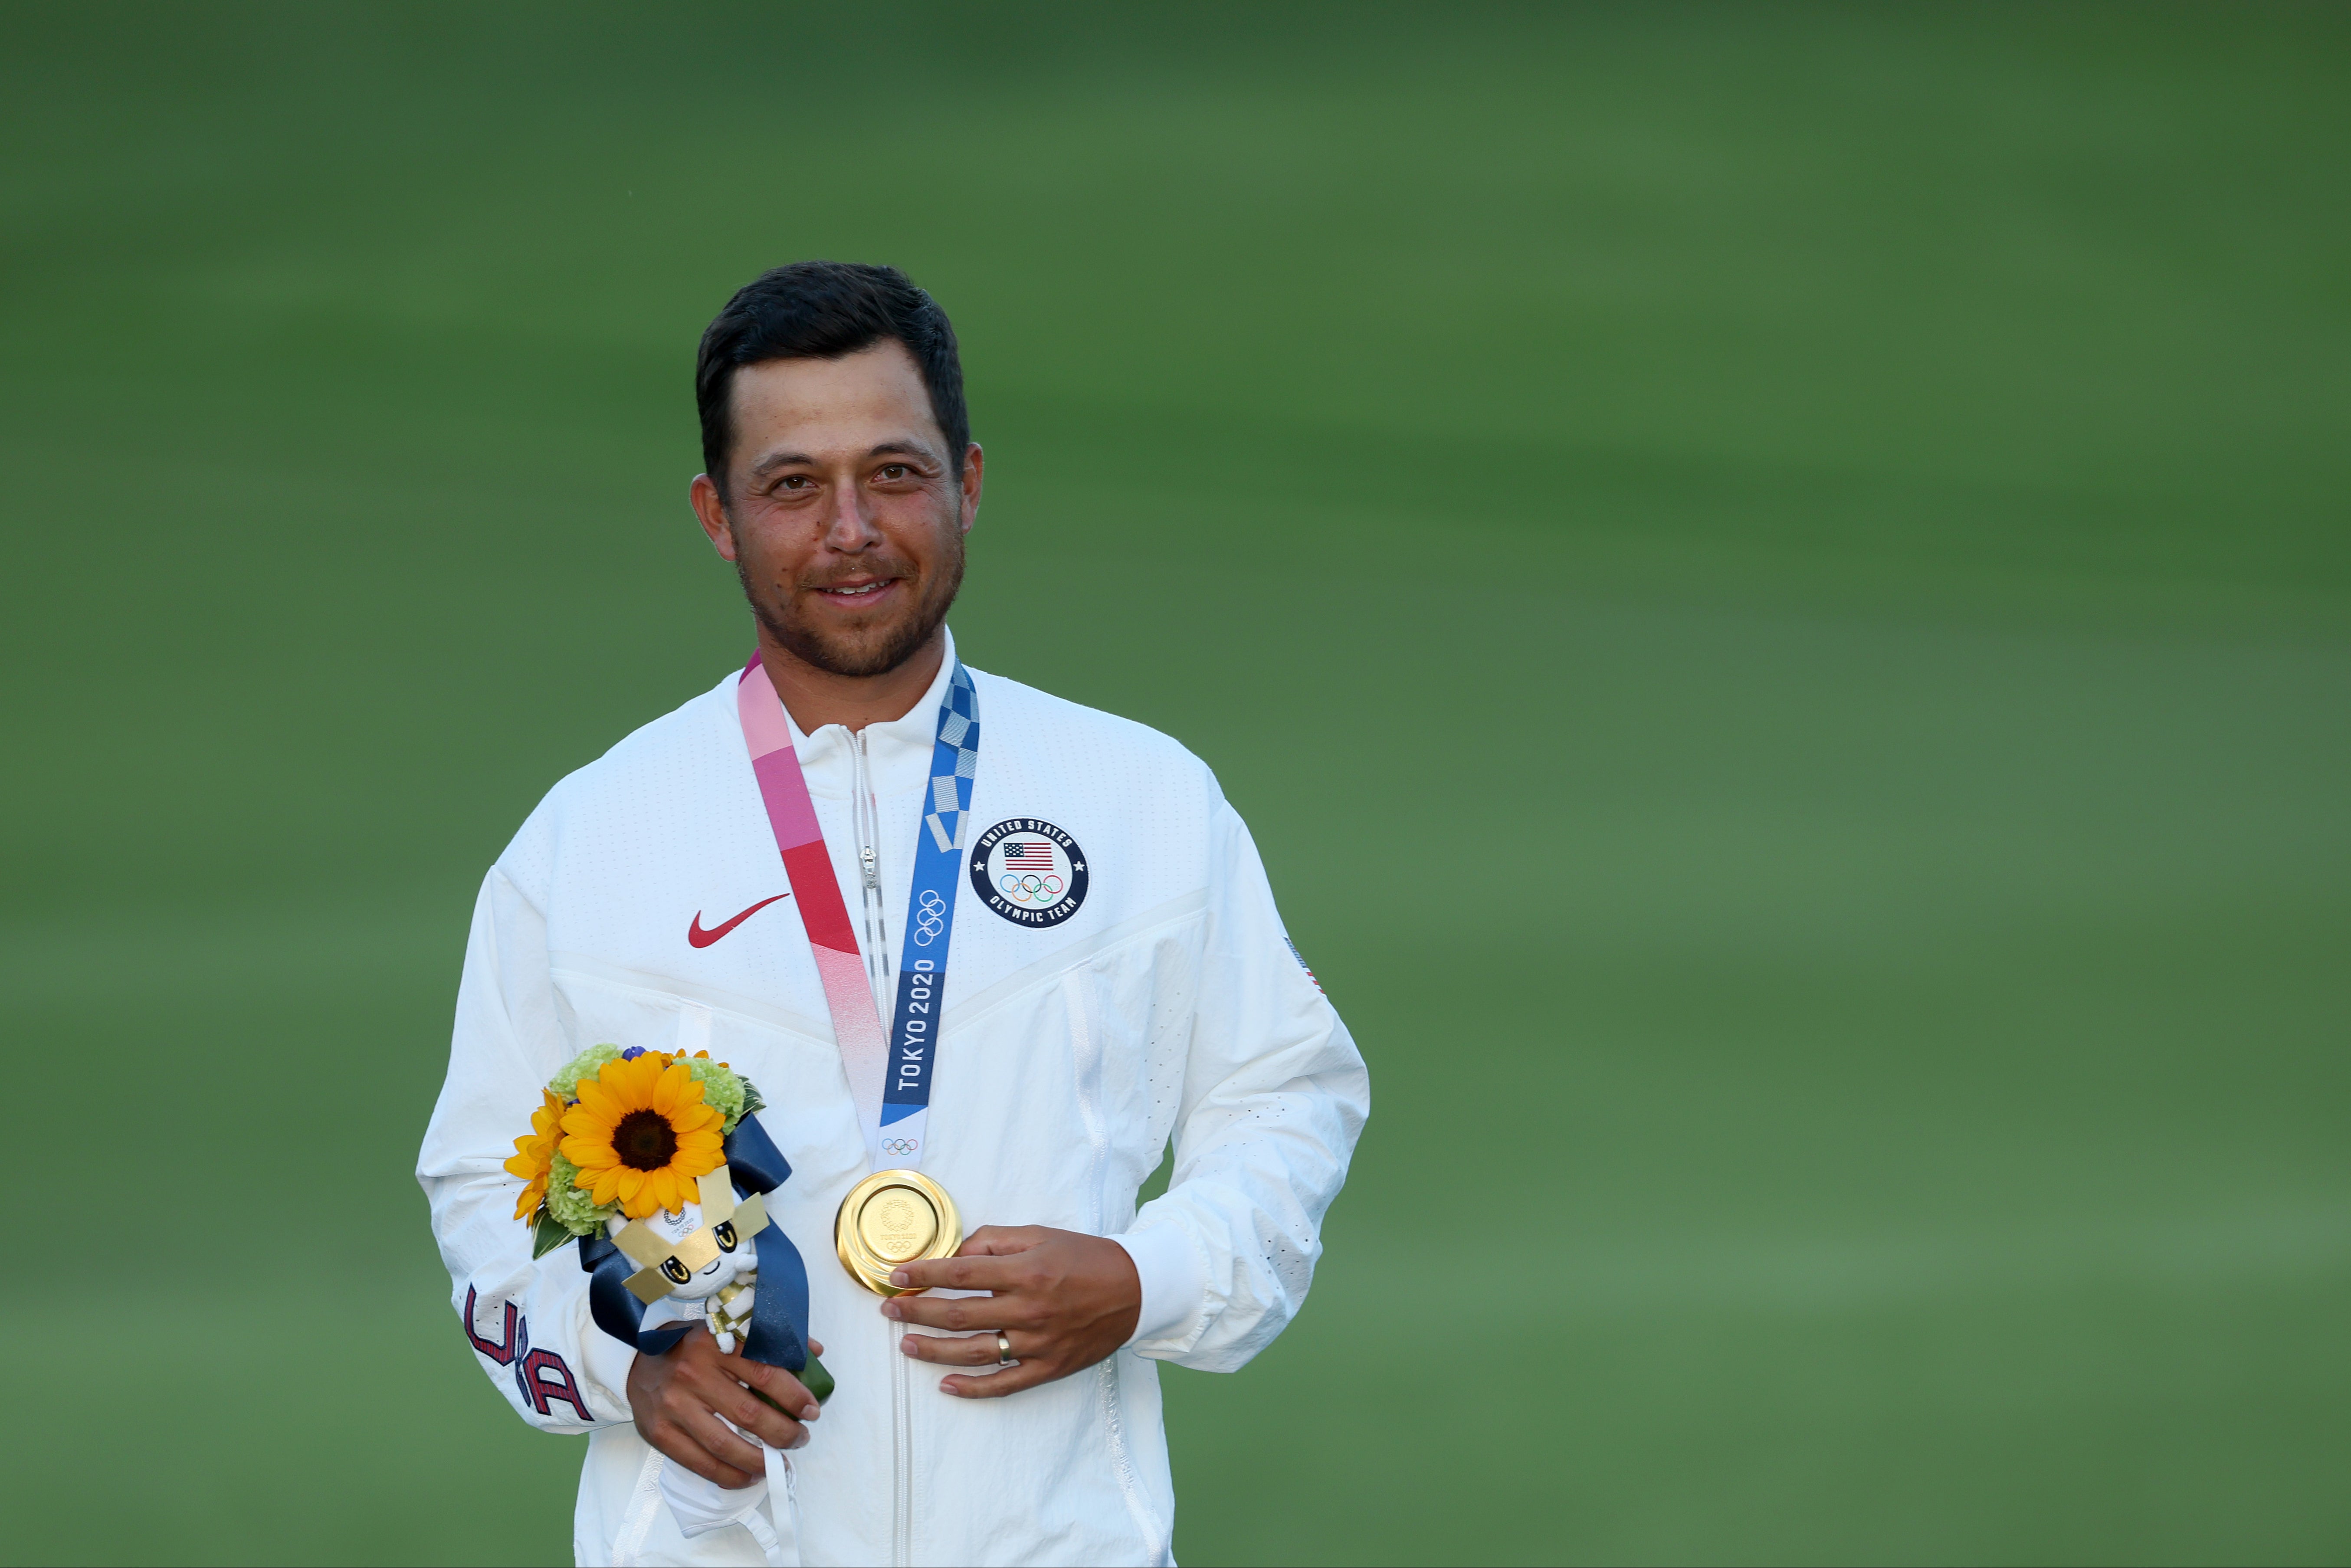 Xander Schauffele won Olympic golf gold in Tokyo